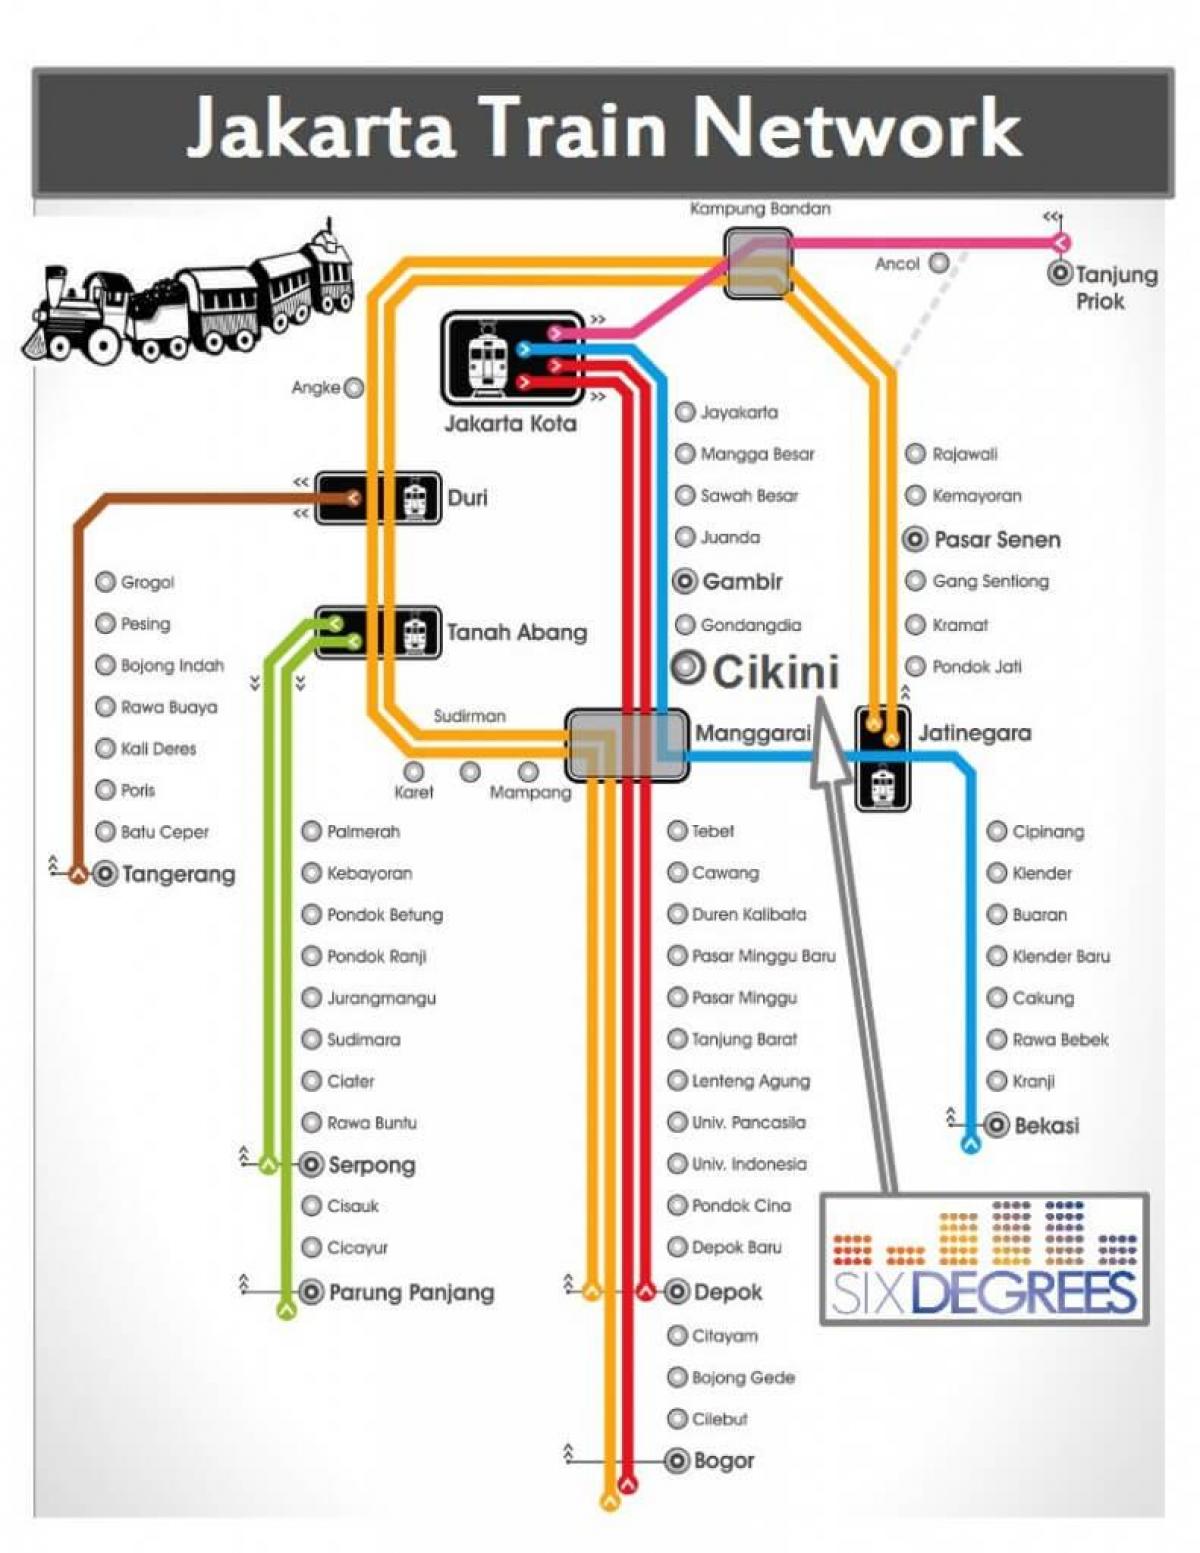 Jakarta railway mapě